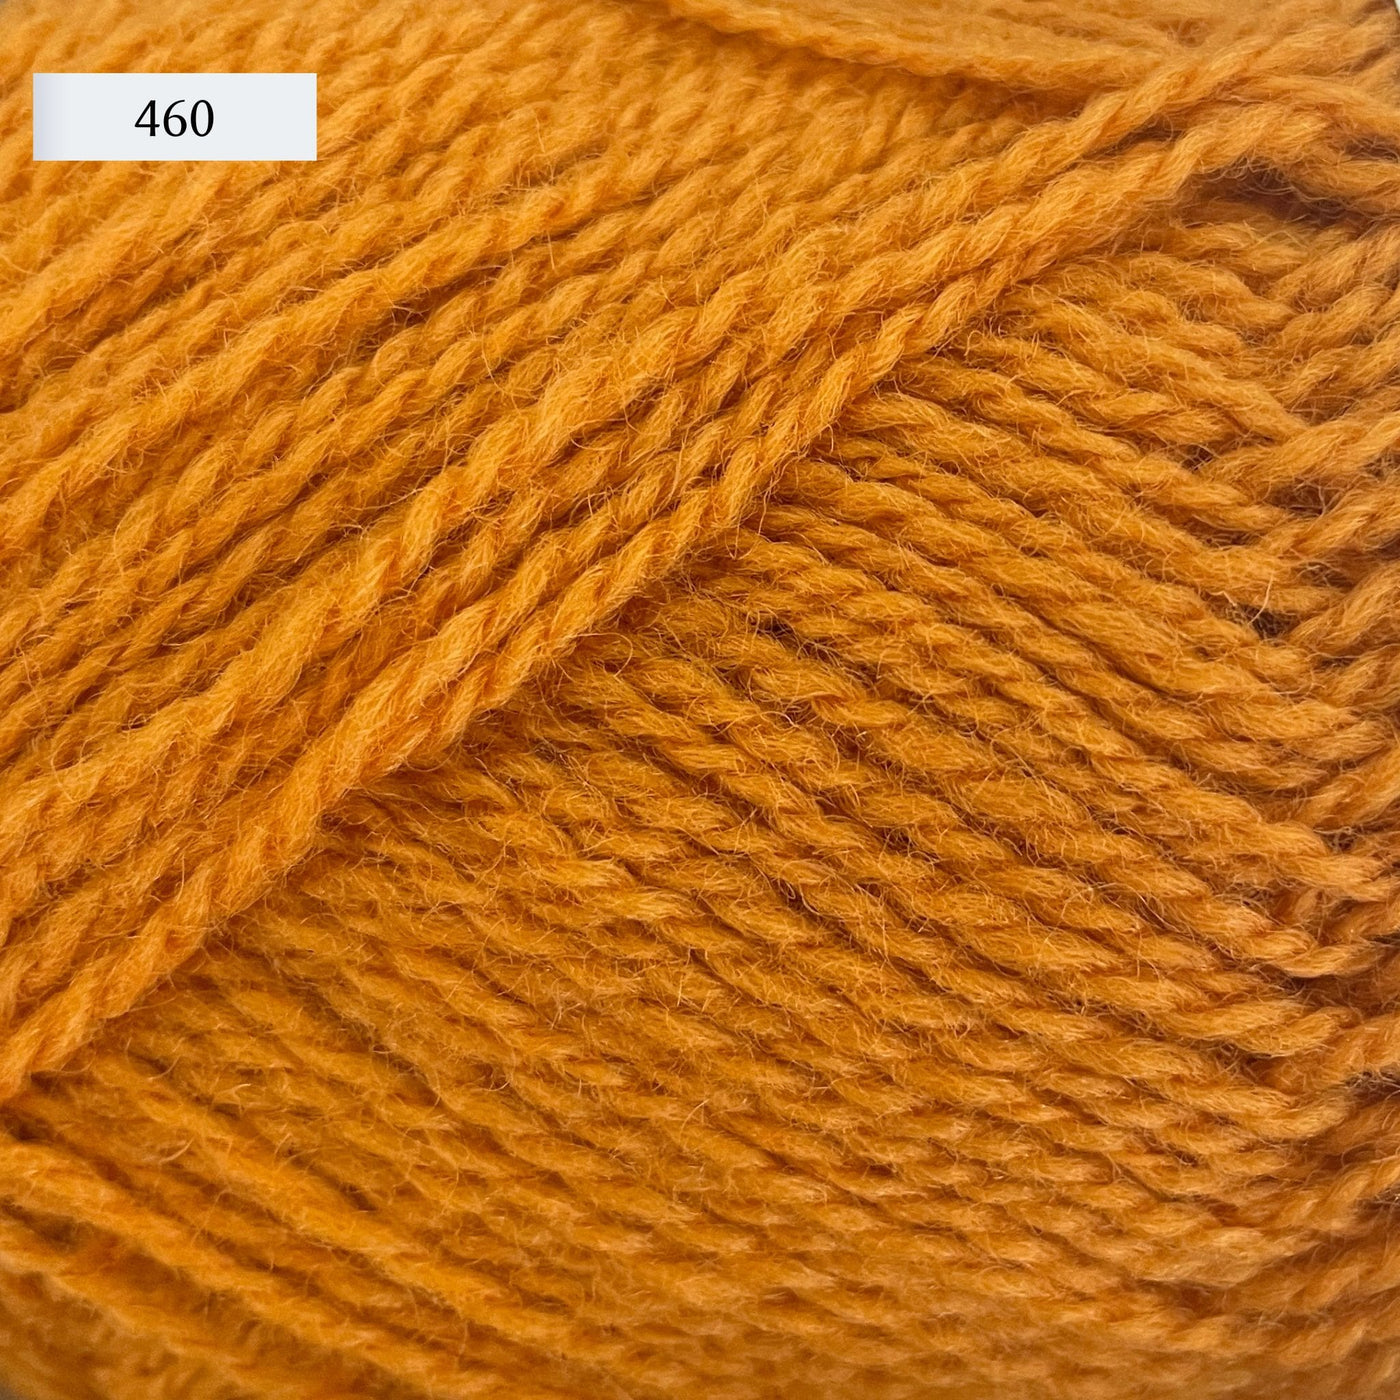 Rauma Finullgarn, a fingering/sport weight yarn, in color 460, a golden orange